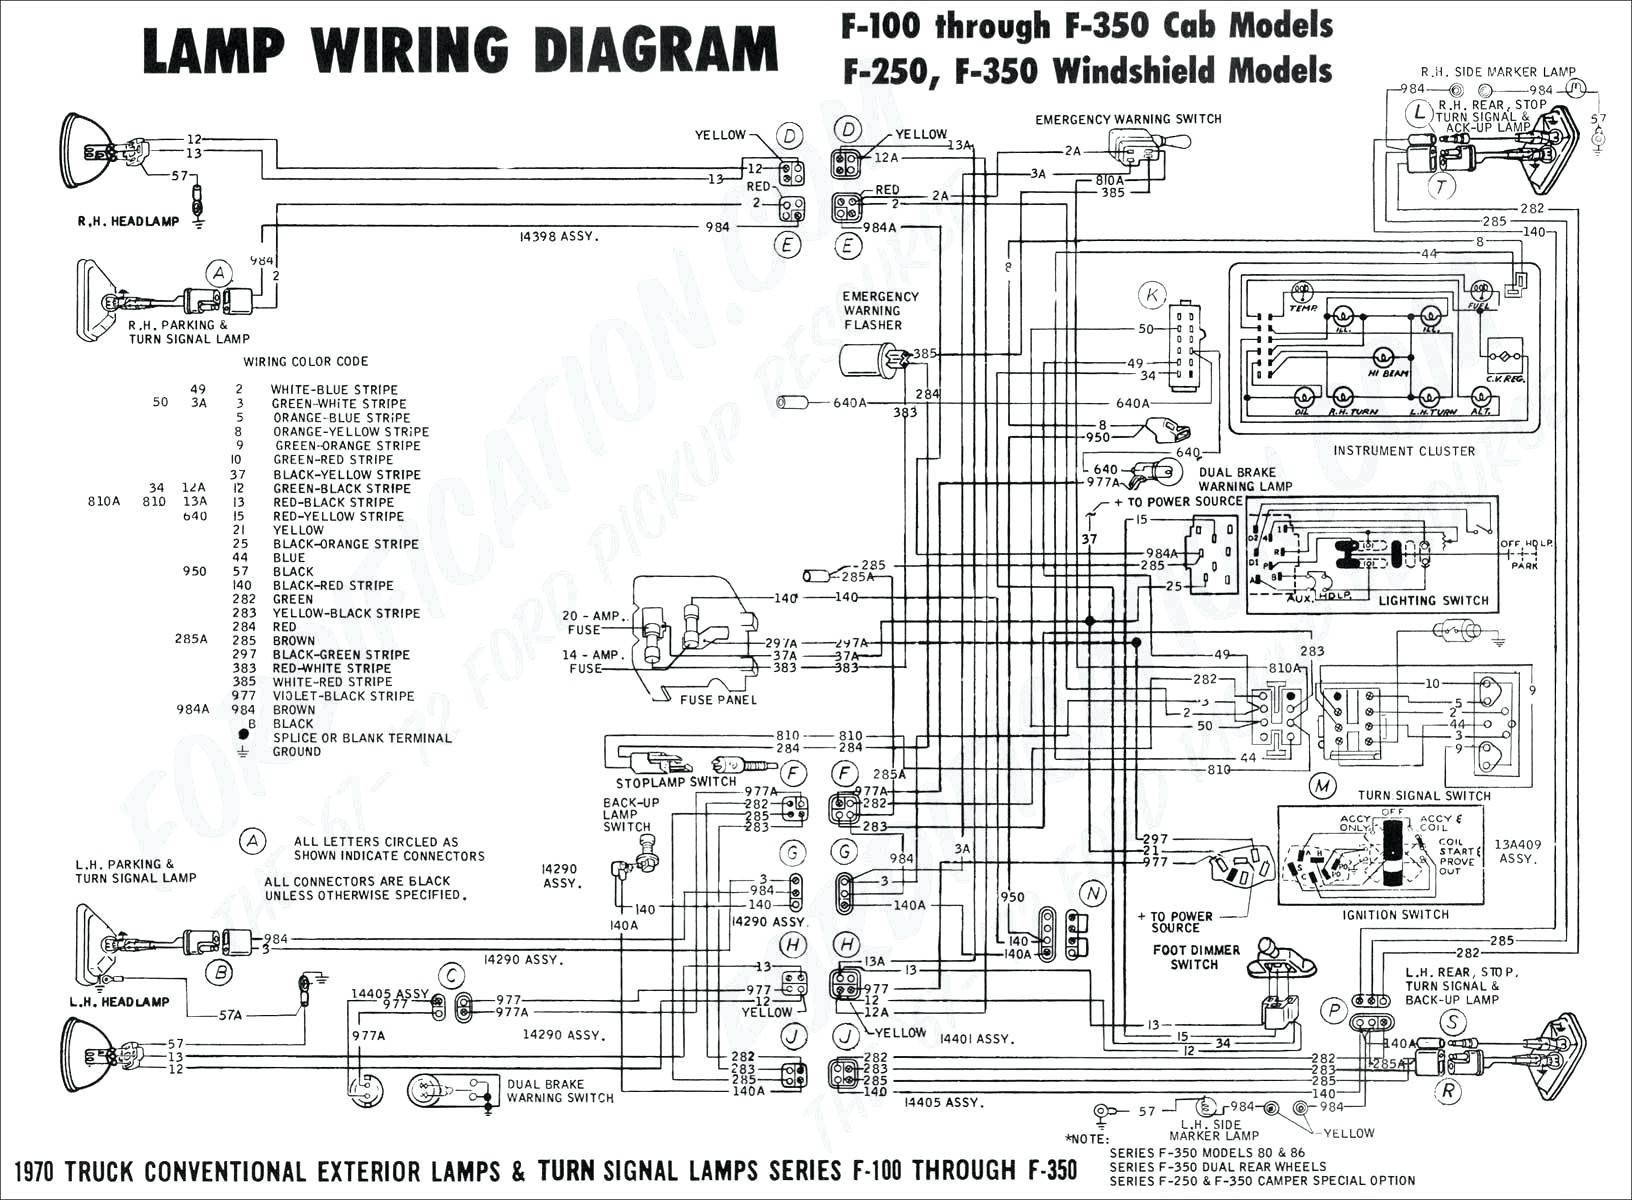 2003 Chevy Trailblazer Wiring Diagram Electrical Circuit 2003 Silverado Wiring Diagram New Wiring Diagram Truck To Trailer